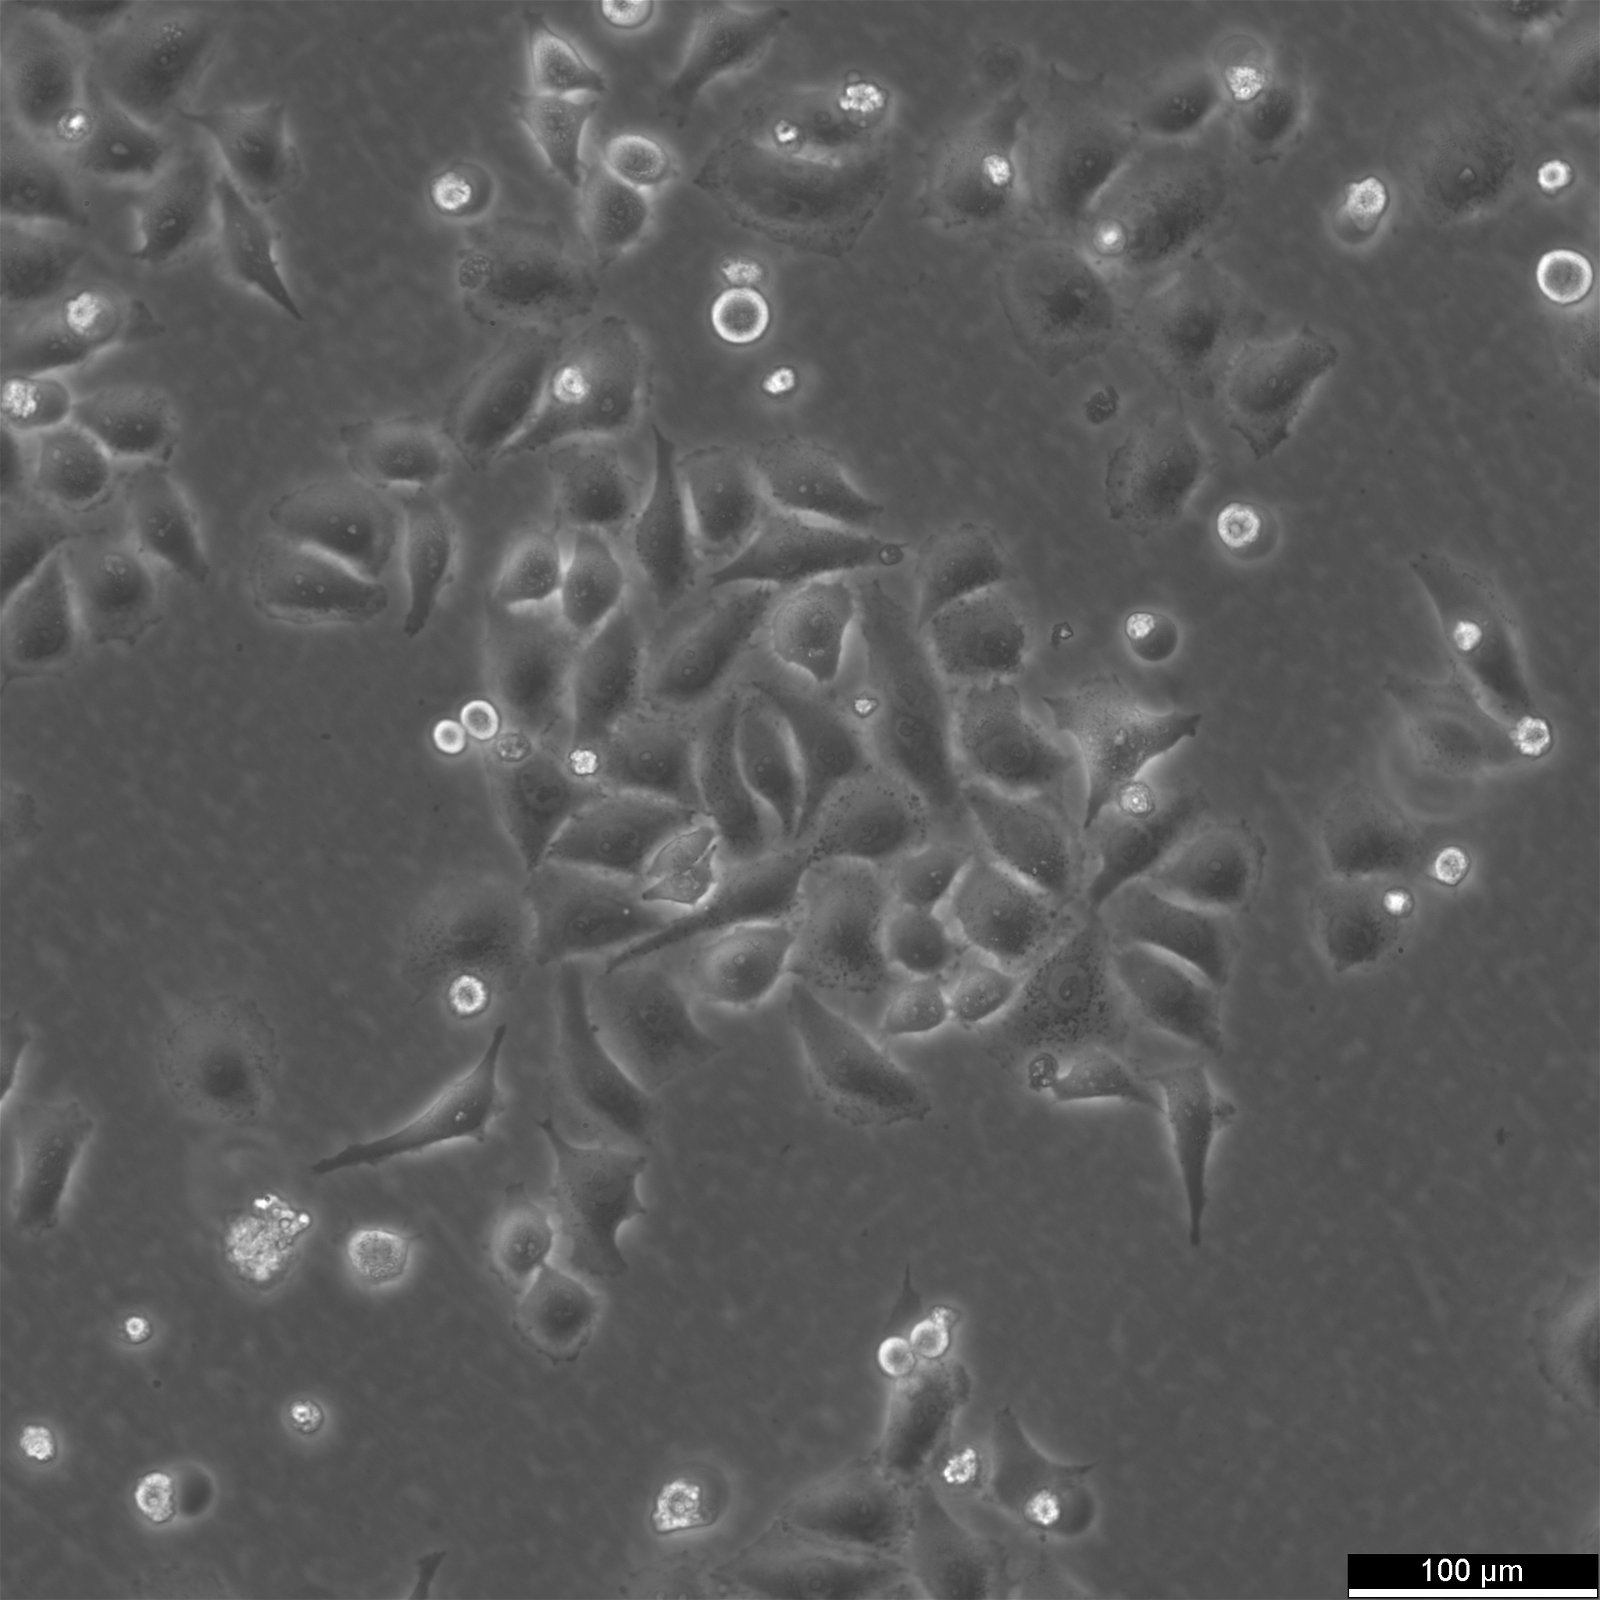 HK-CRISPR-Nup188-mEGFP #11-092 Cells